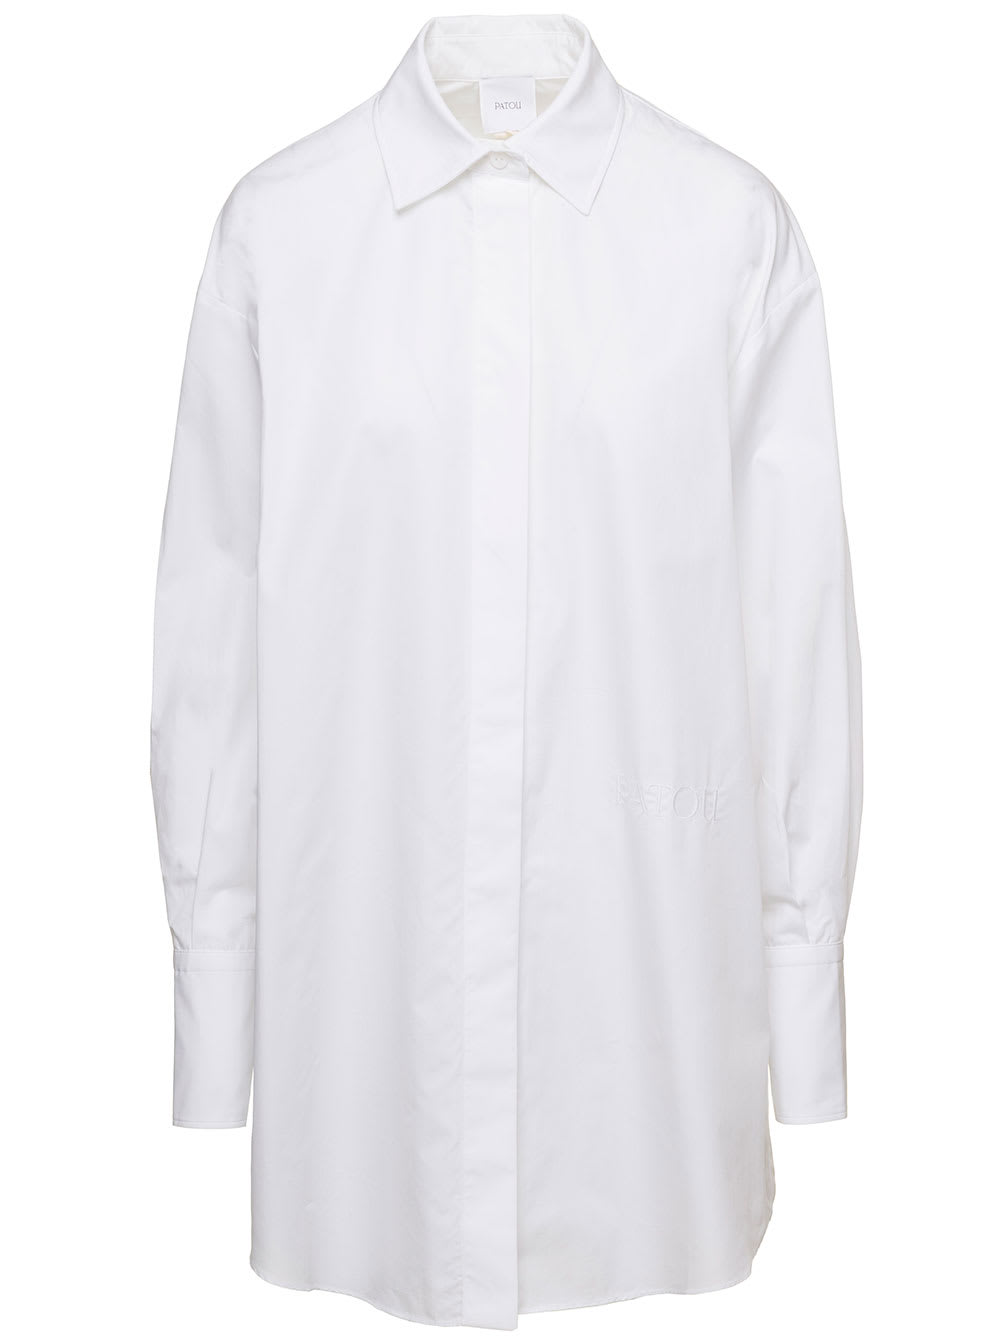 PATOU MINI WHITE SHIRT DRESS WITH HIGH CUFFS IN COTTON WOMAN